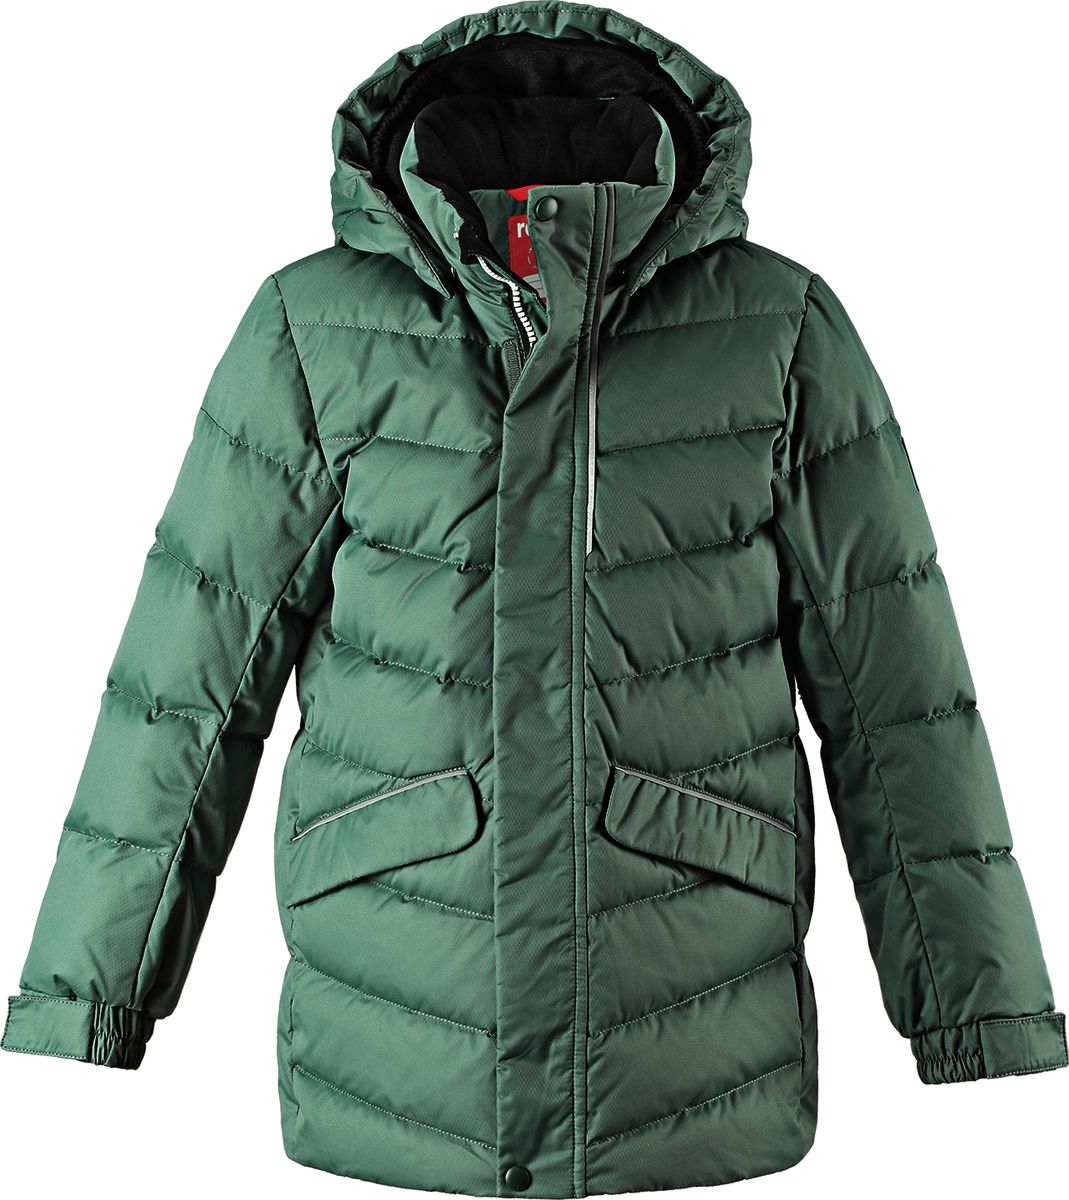 Куртка для мальчика Reima Janne, цвет: зеленый. 5313718630. Размер 152